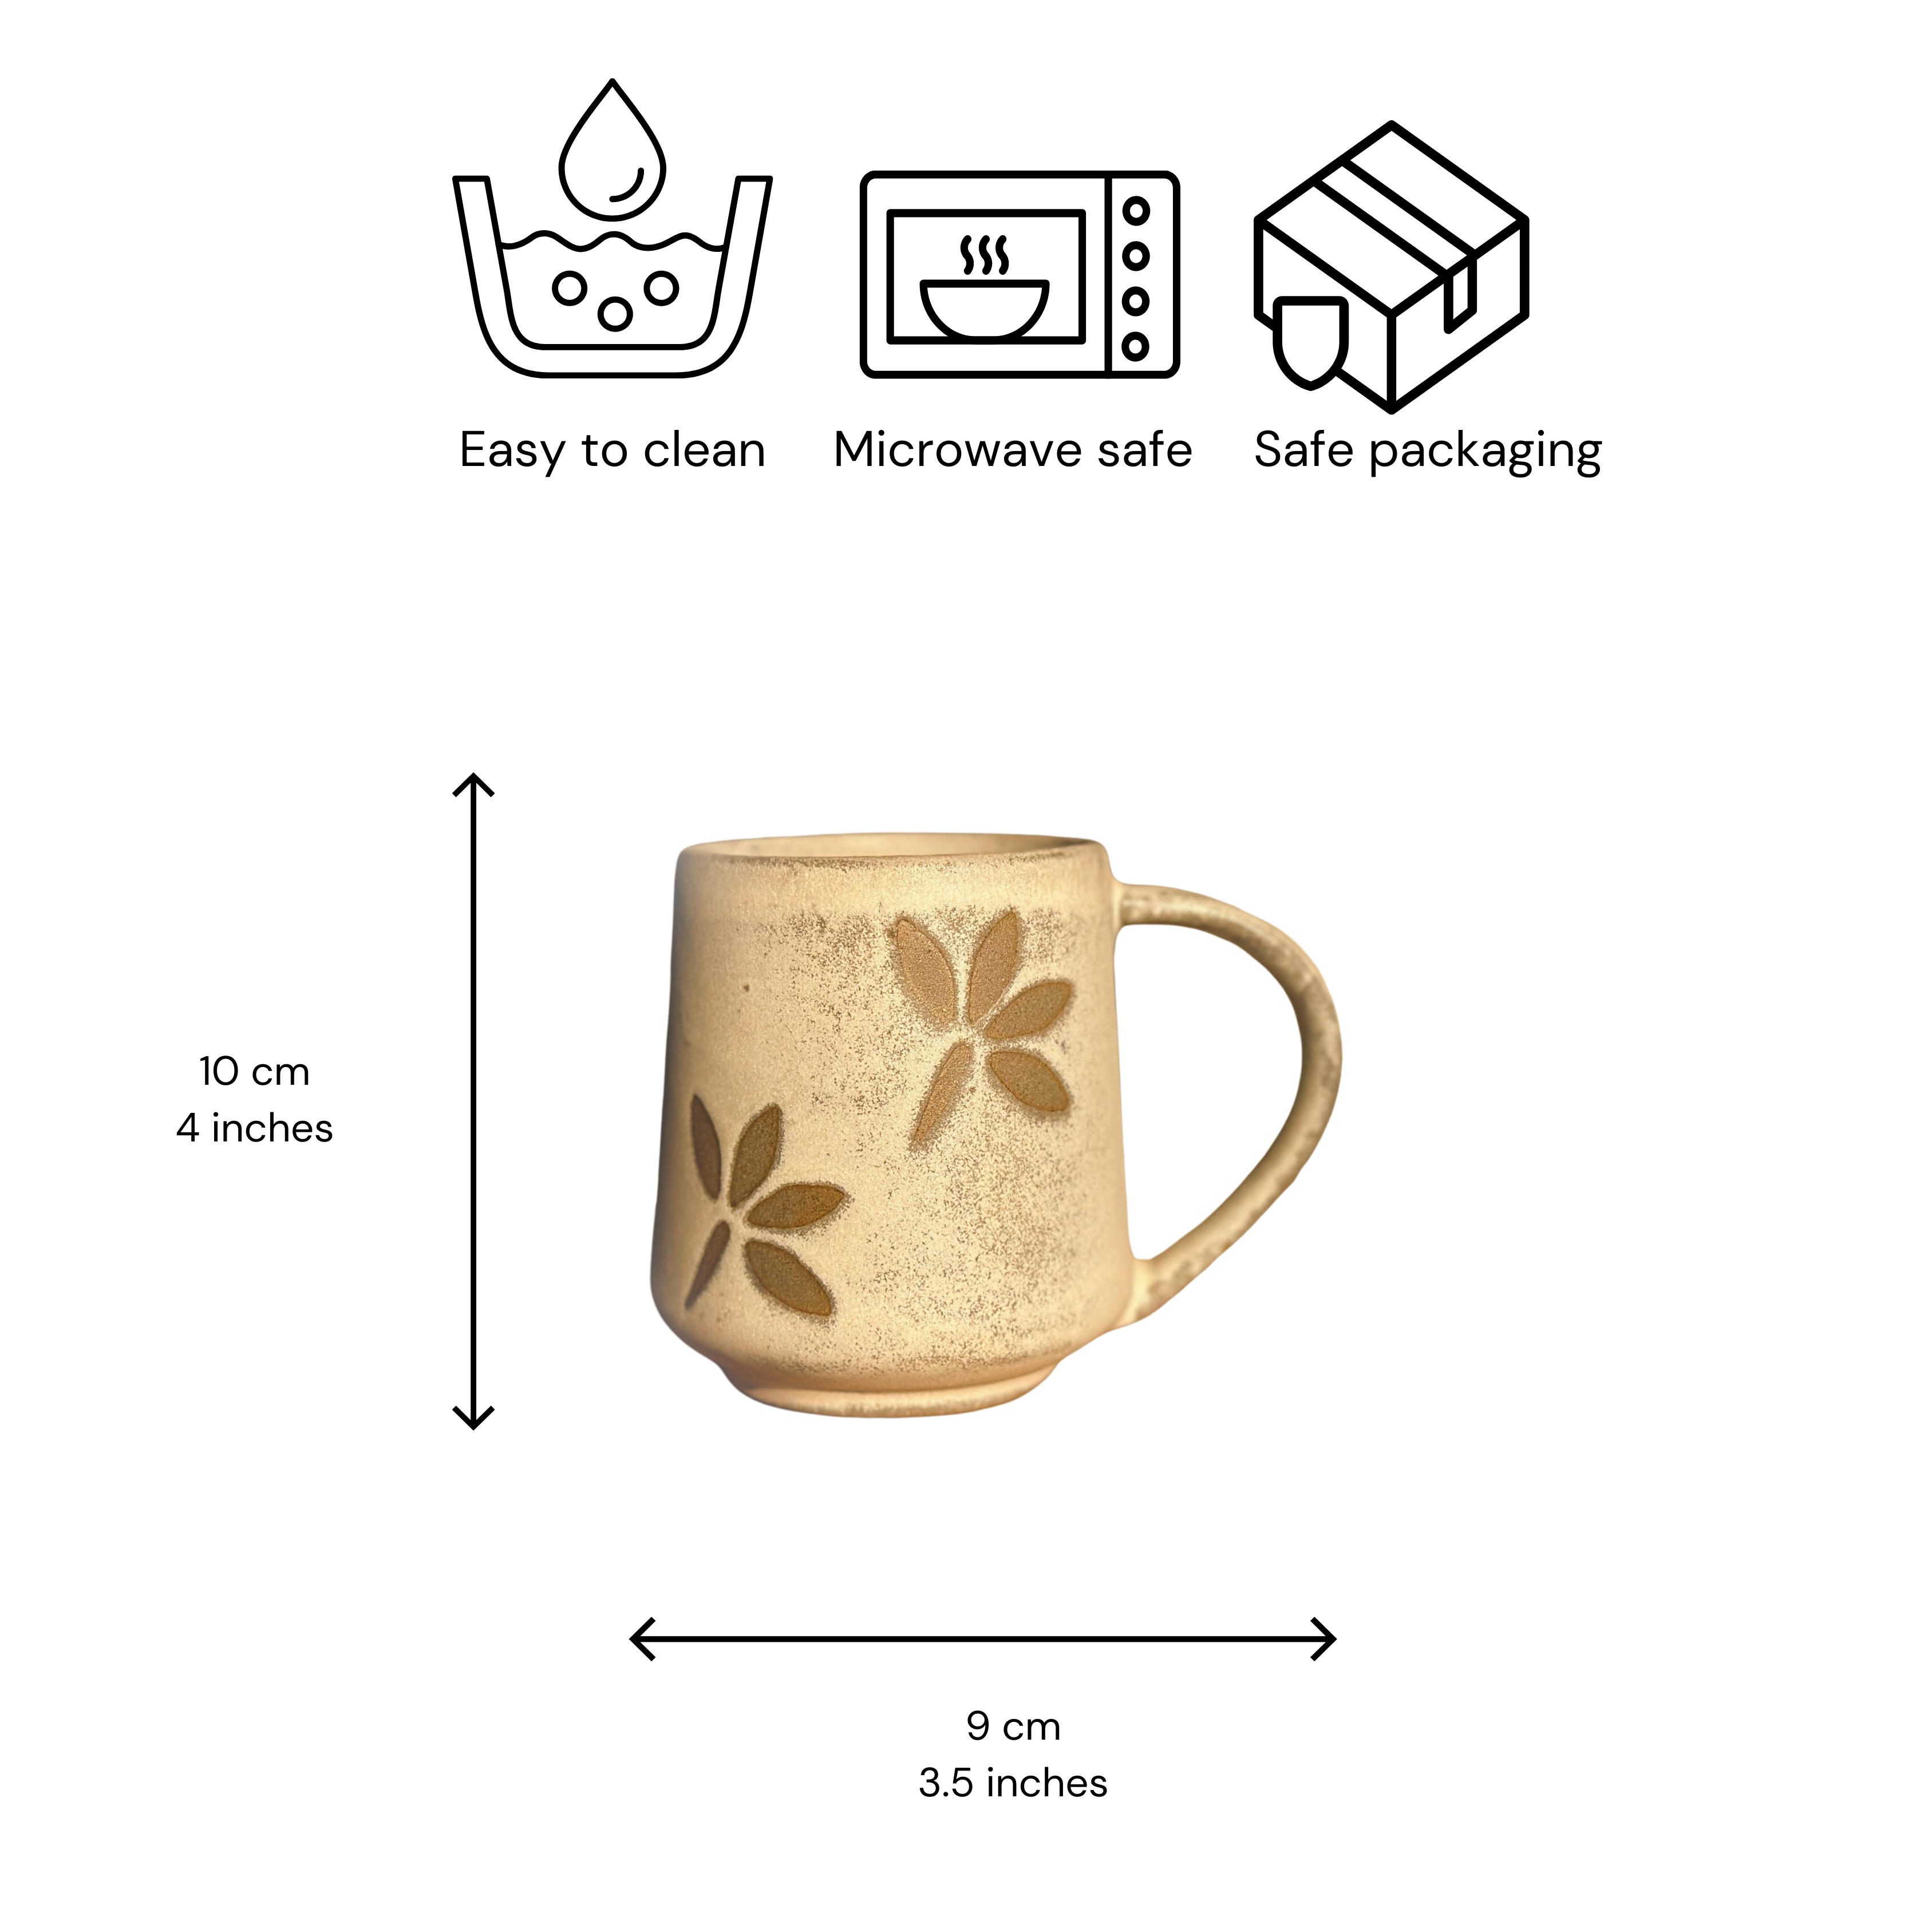 Flower Power Coffee Cup -350ml